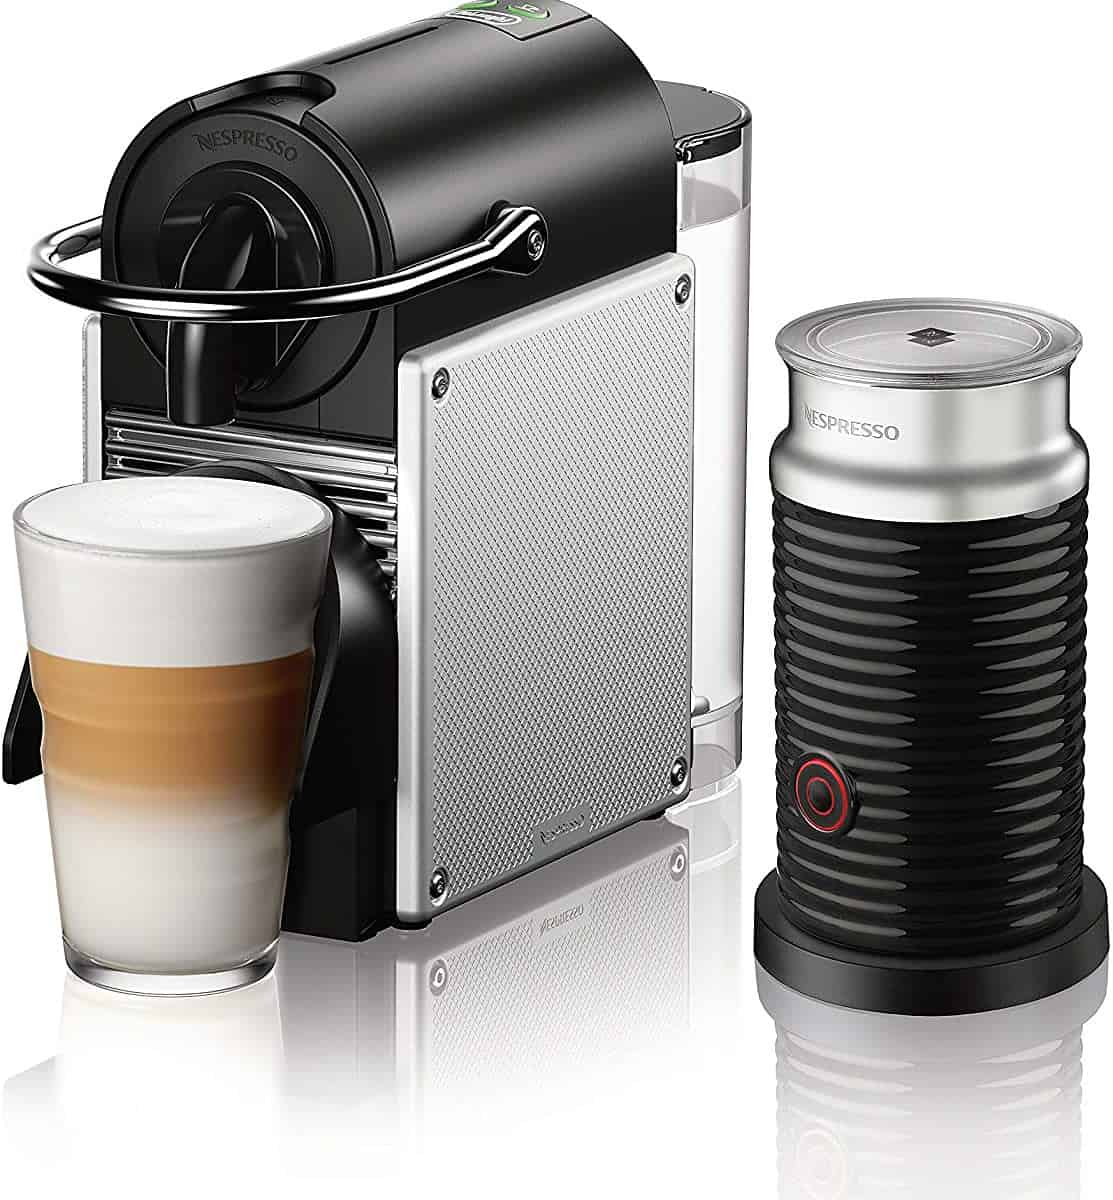 Nespresso Pixie Espresso Machine by De’Longhi